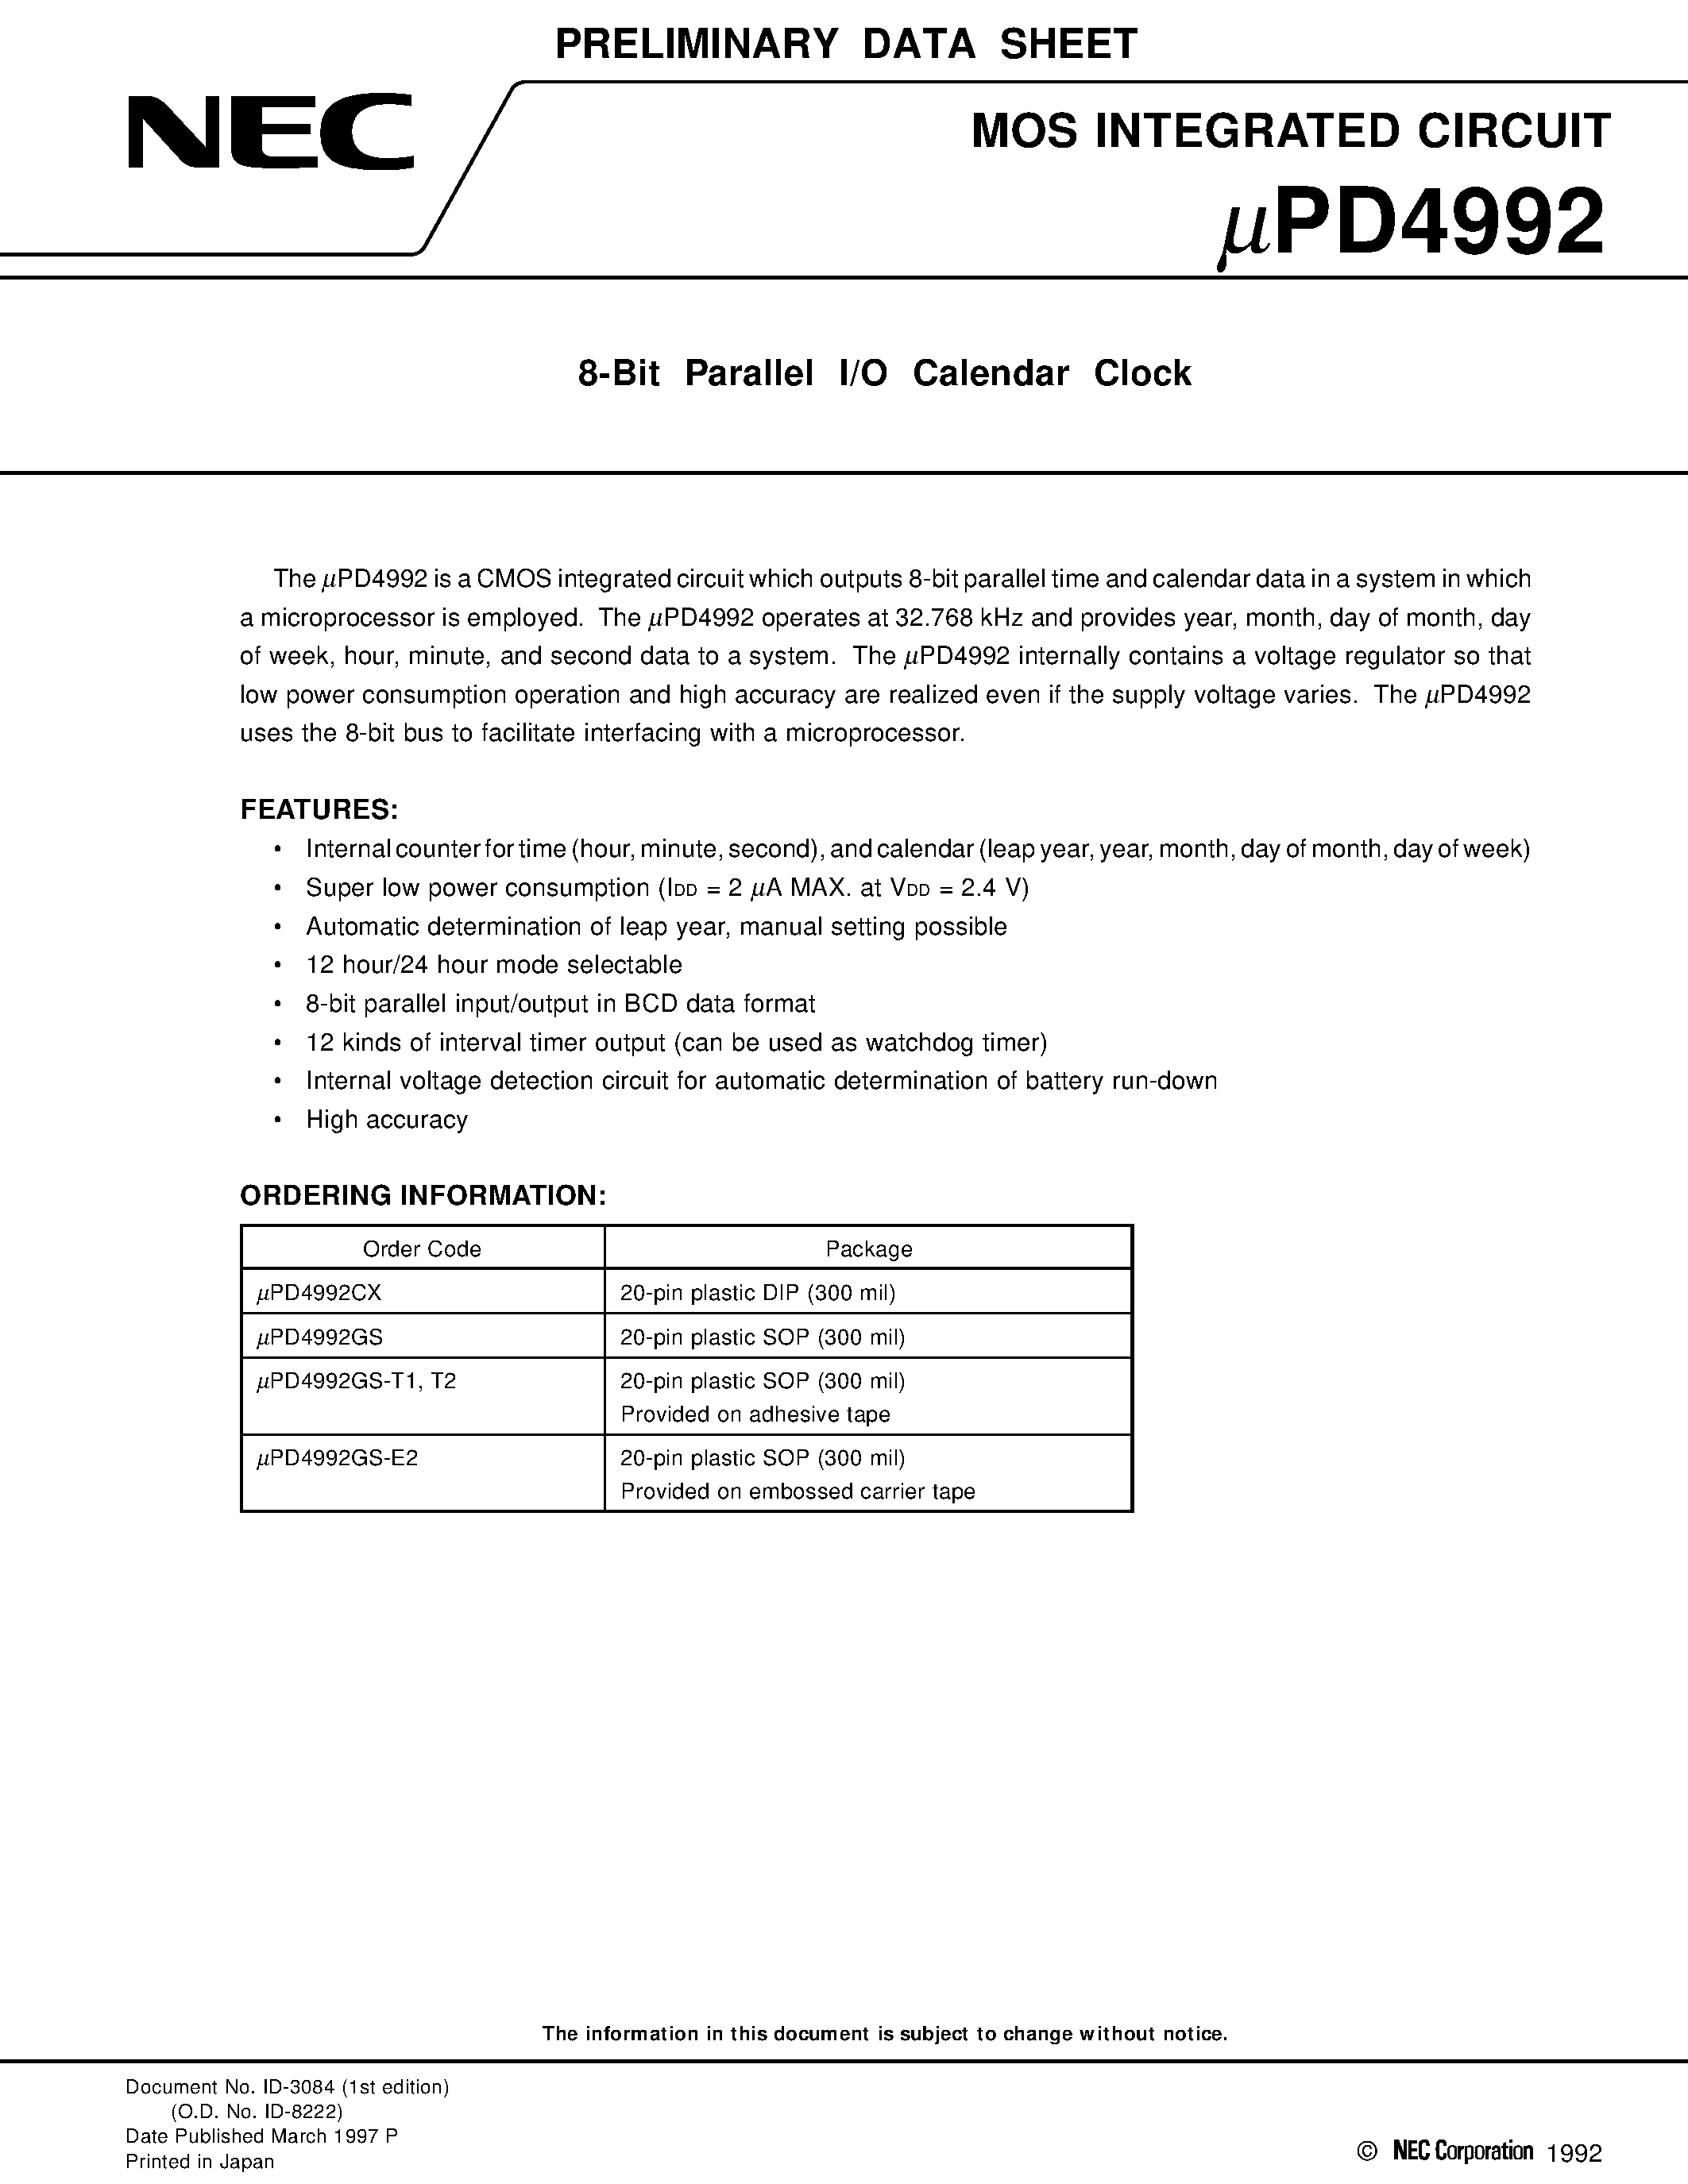 Datasheet UPD4992GS - 8-Bit Parallel I/O Calendar Clock page 1